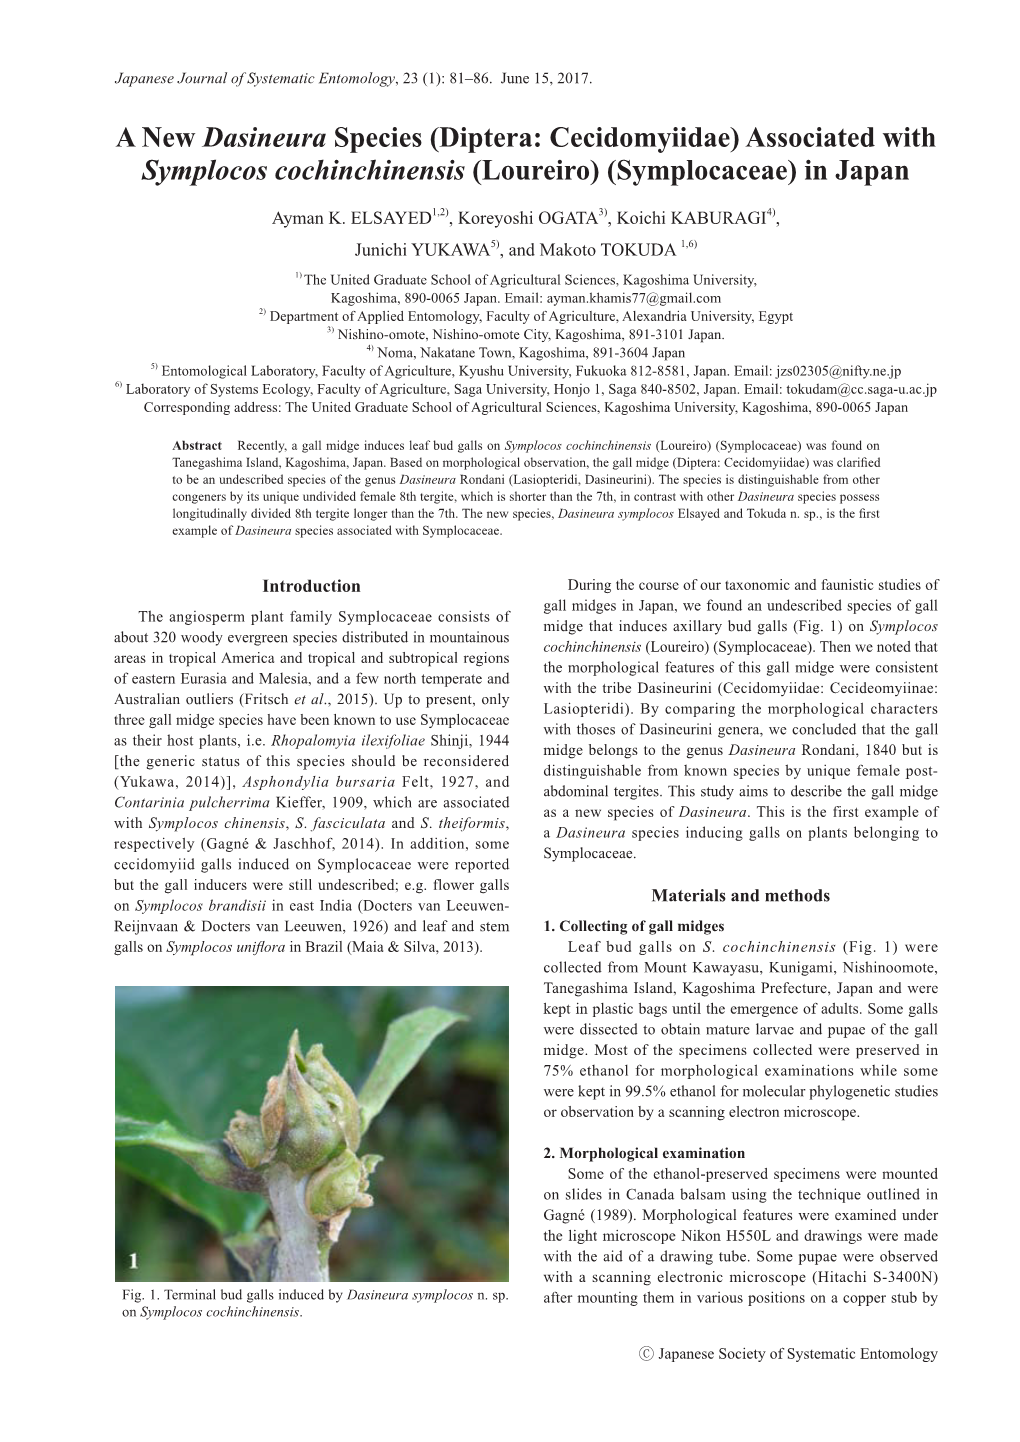 A New Dasineura Species (Diptera: Cecidomyiidae) Associated with Symplocos Cochinchinensis (Loureiro) (Symplocaceae) in Japan